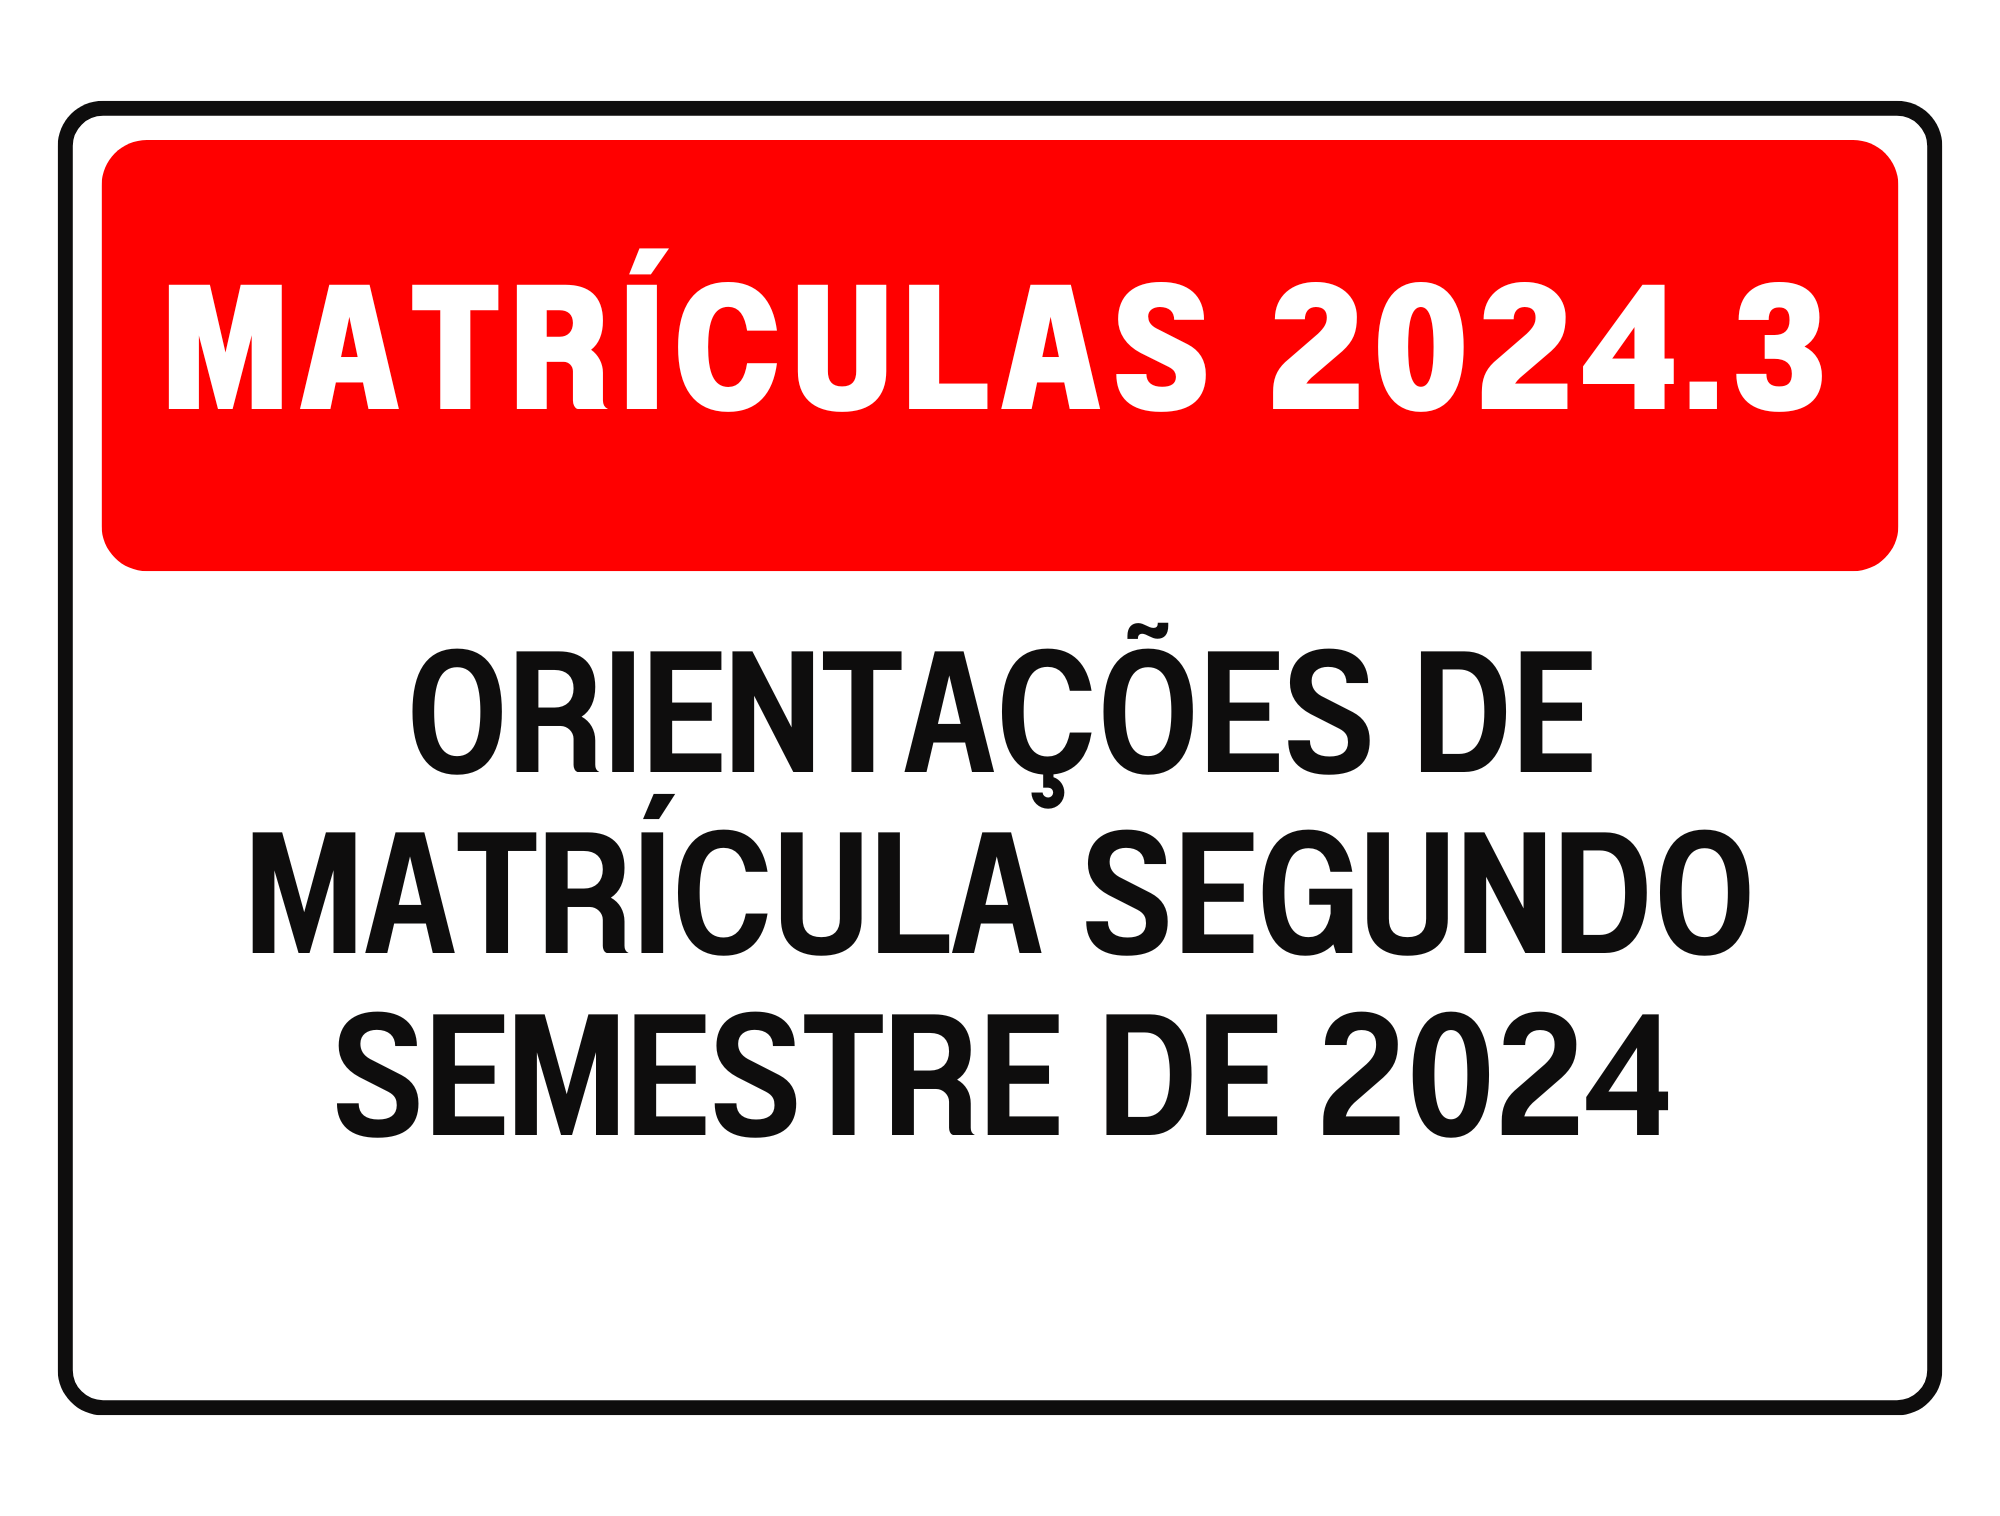 Matrículas 2024.3